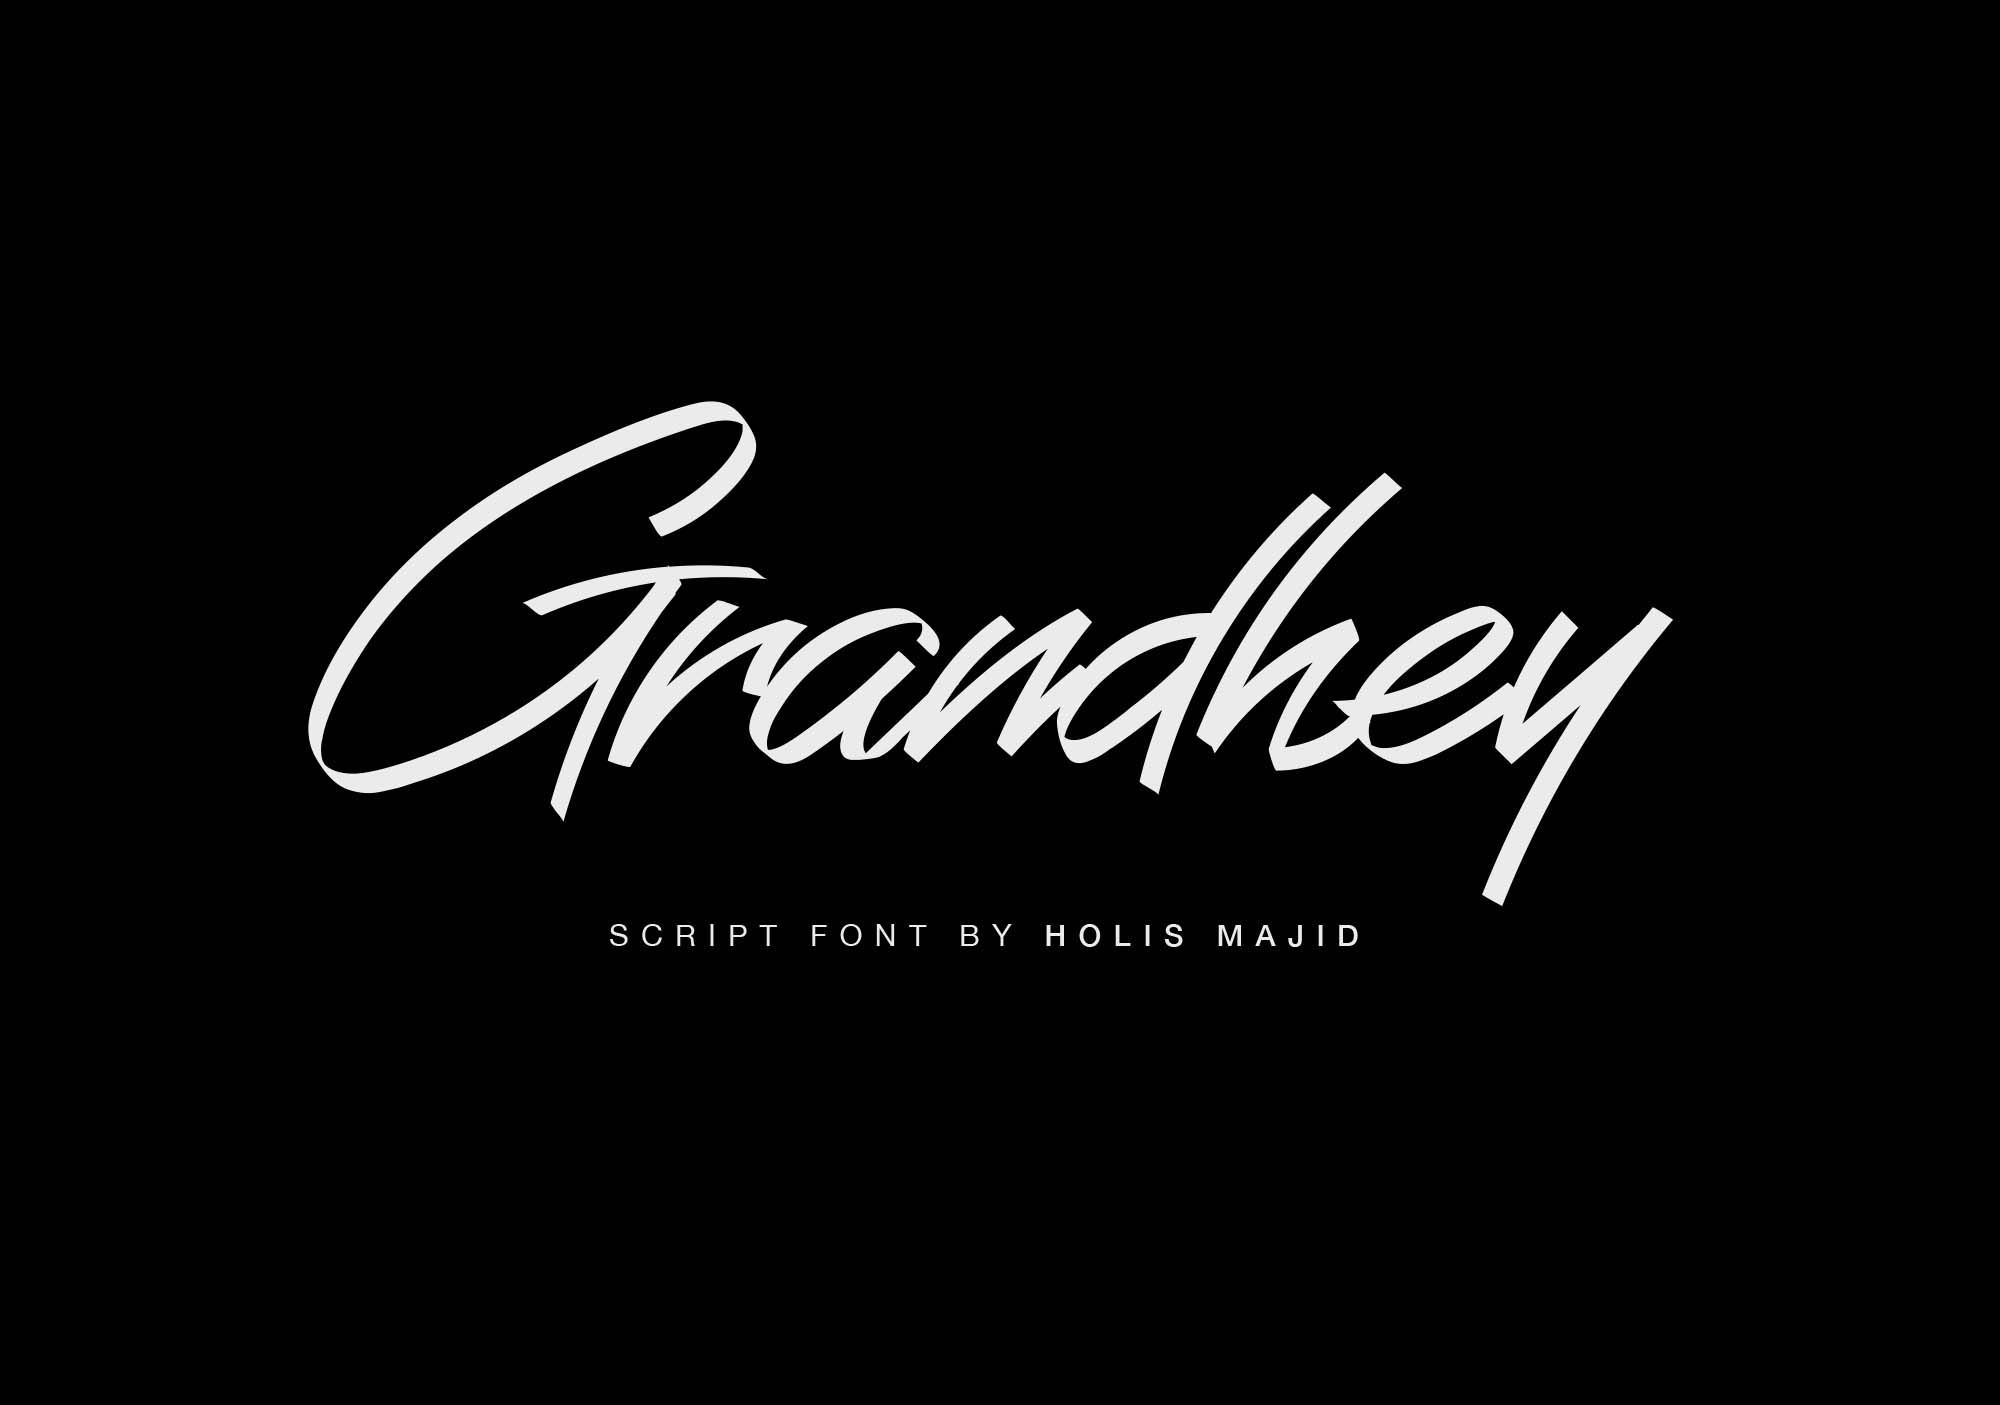 Grandhey Script Font